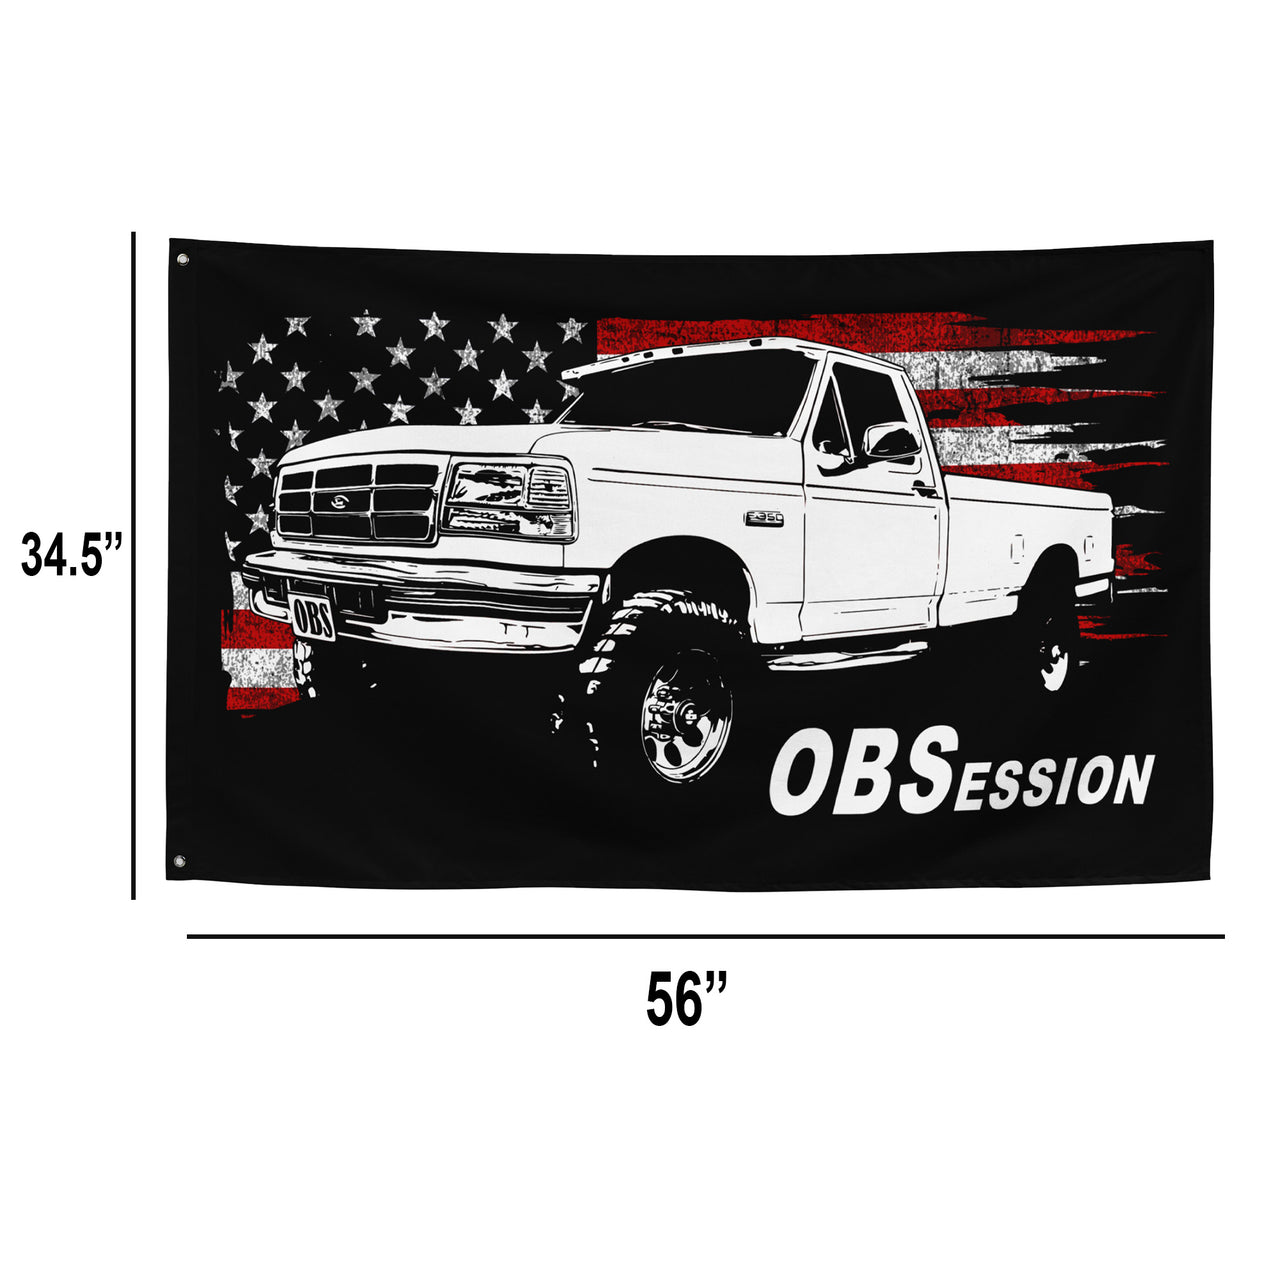 OBS Single Cab Truck Wall Flag dimensions